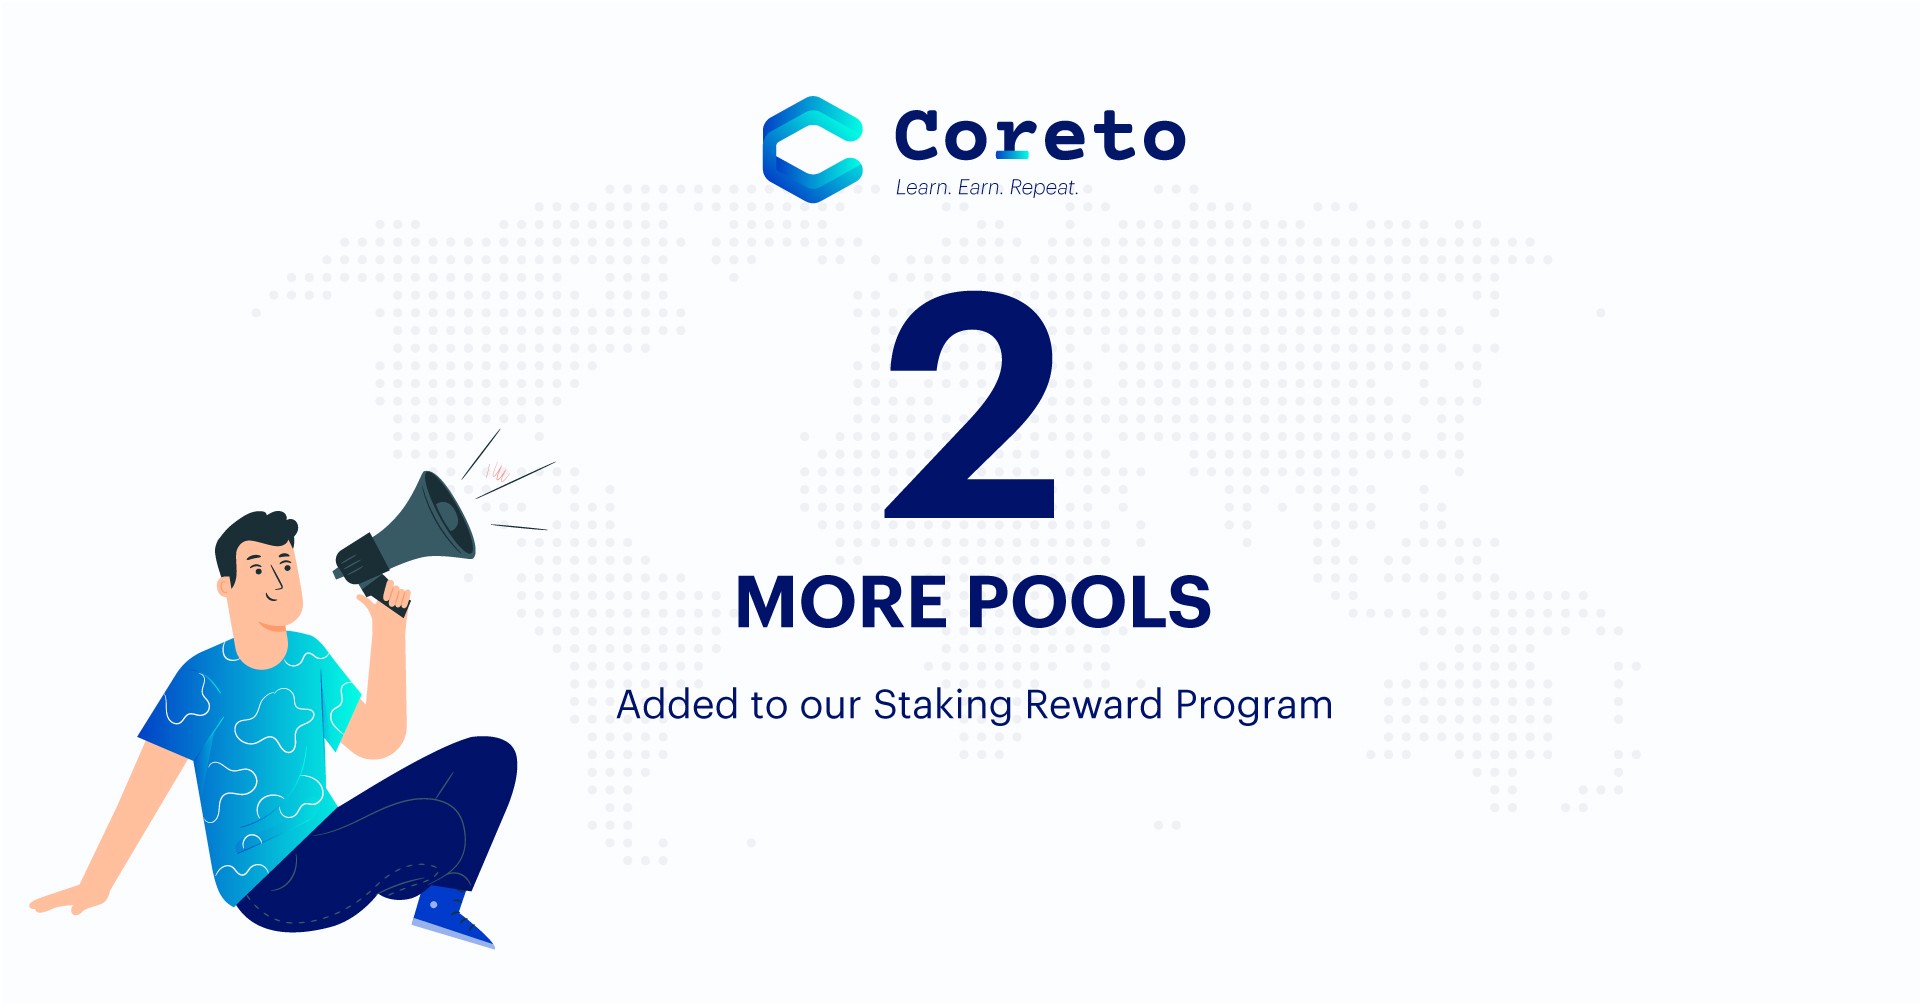 New additions to Coreto’s Staking Reward Program